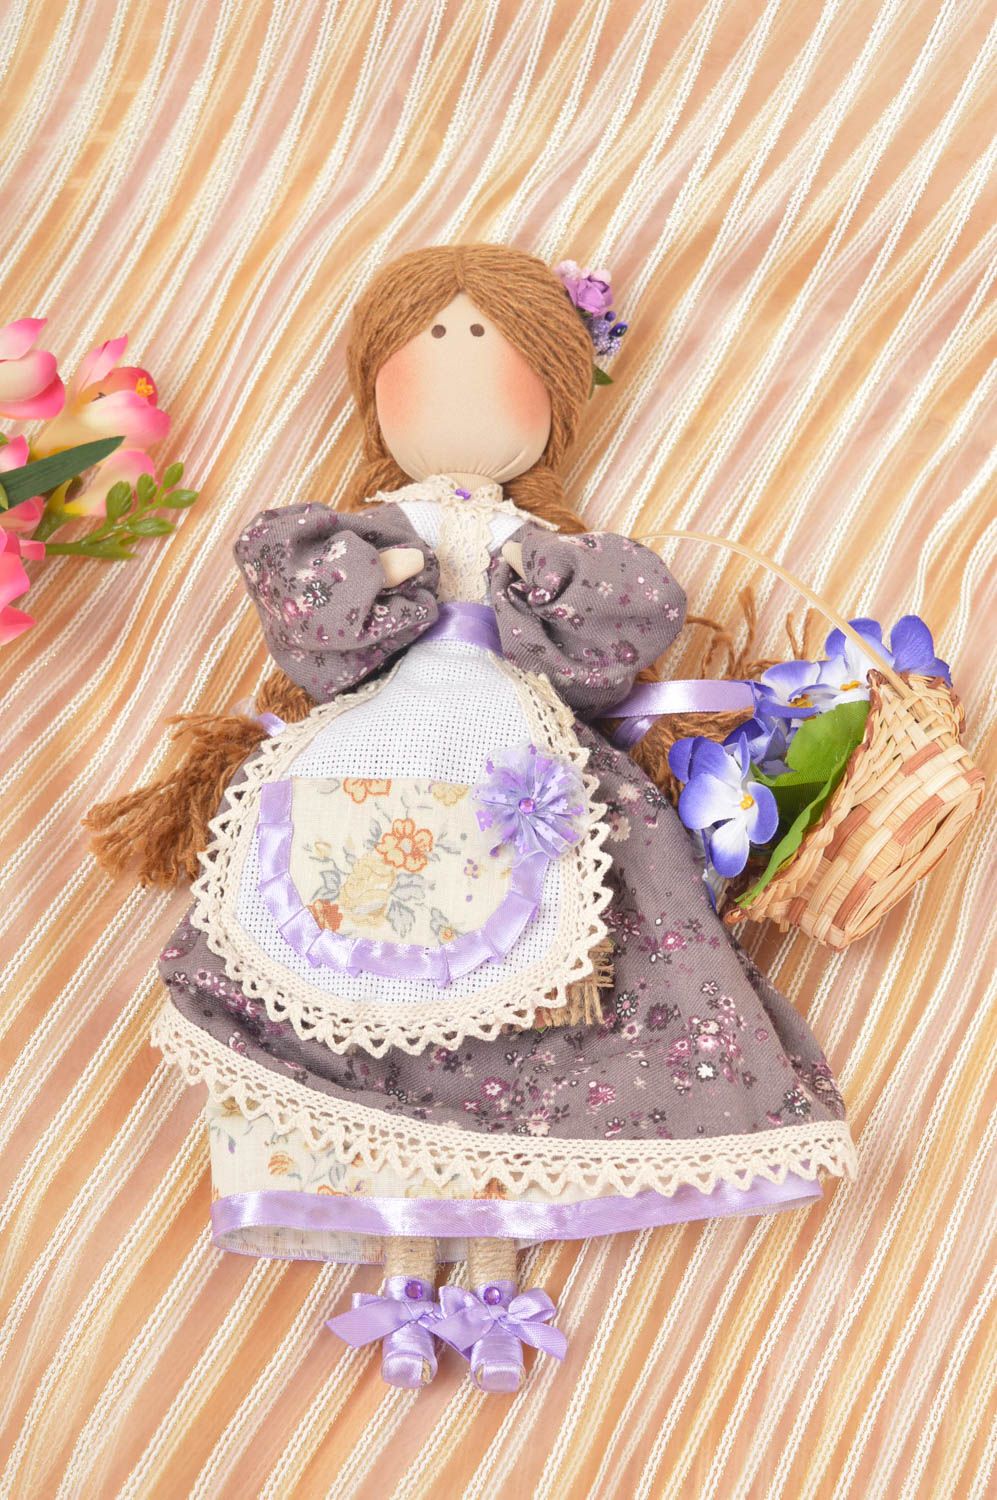 Designer doll in vintage dress stuffed toy designer childrens toy decor gift photo 1